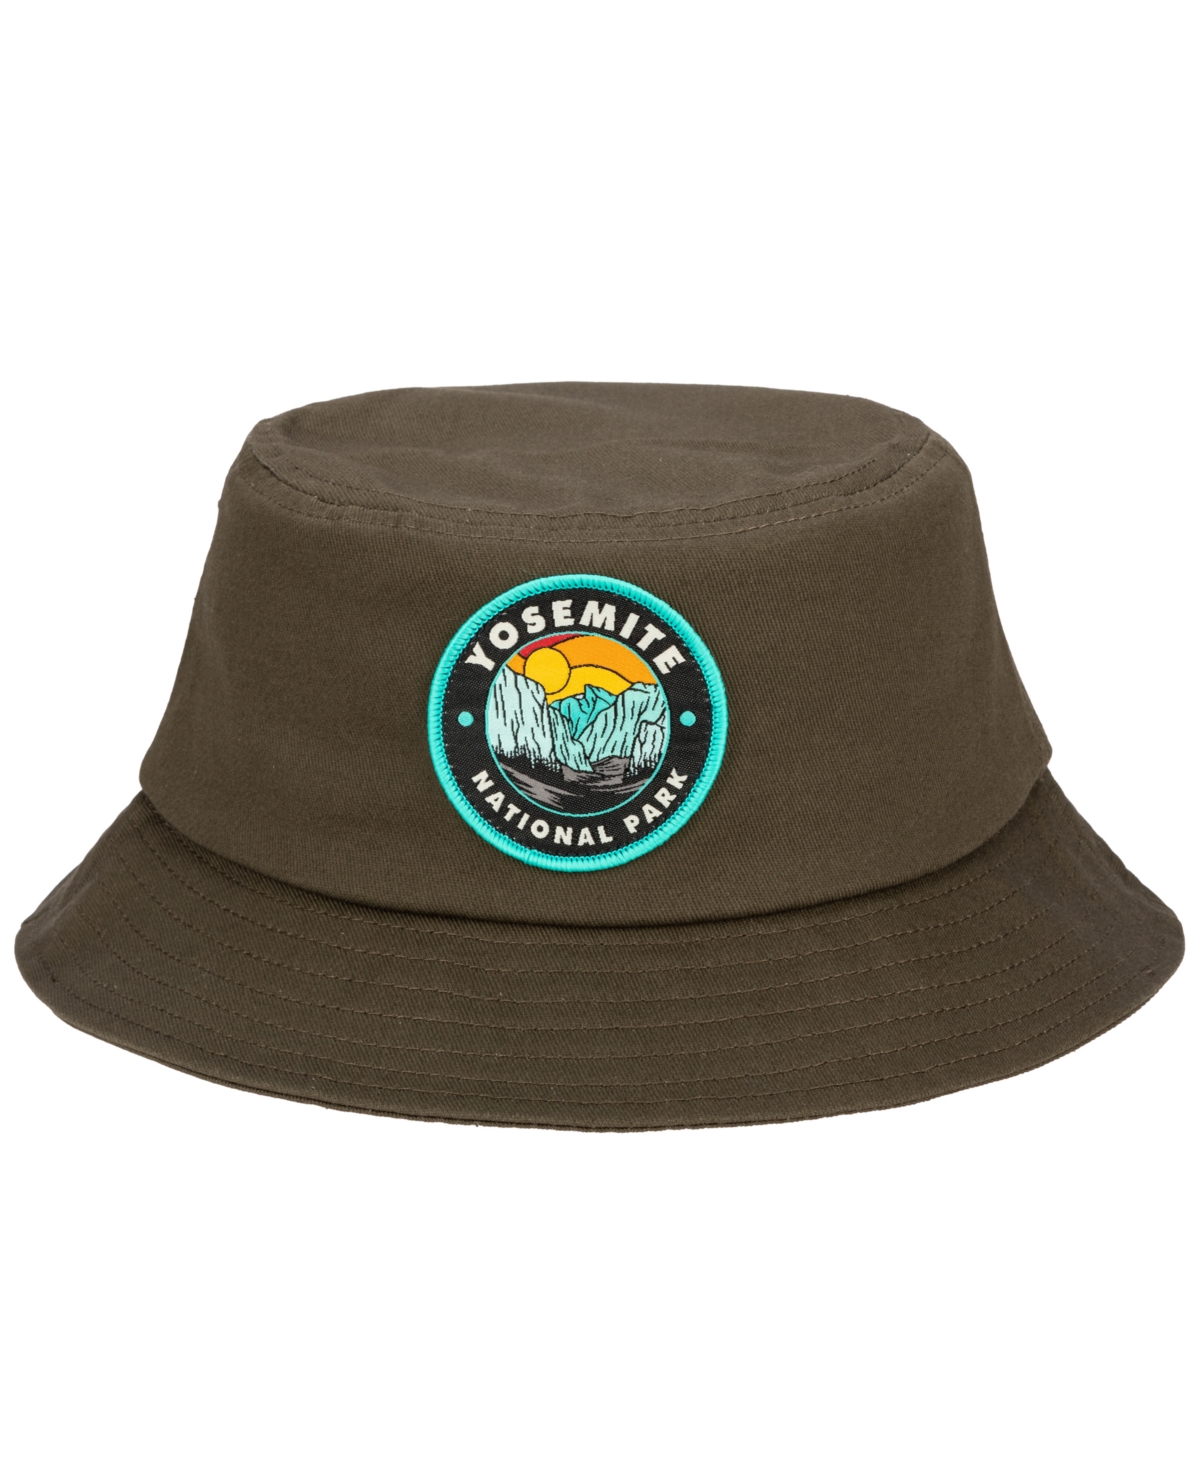 Men's Bucket Hat - Yosemite Gray